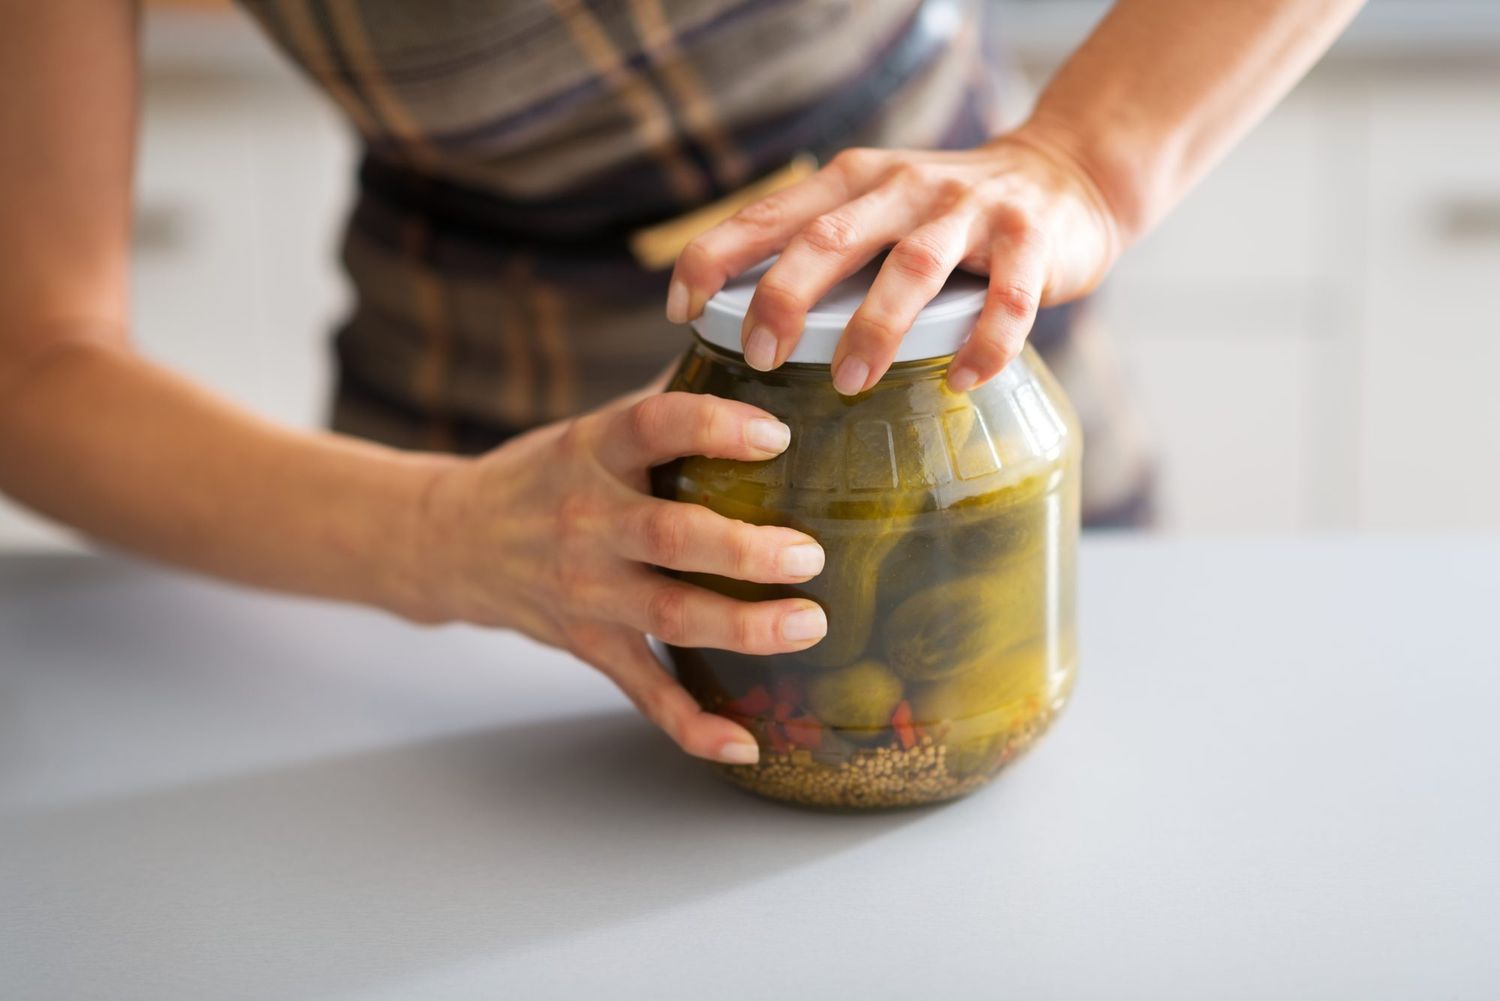 unscrewing stuck pickle jar